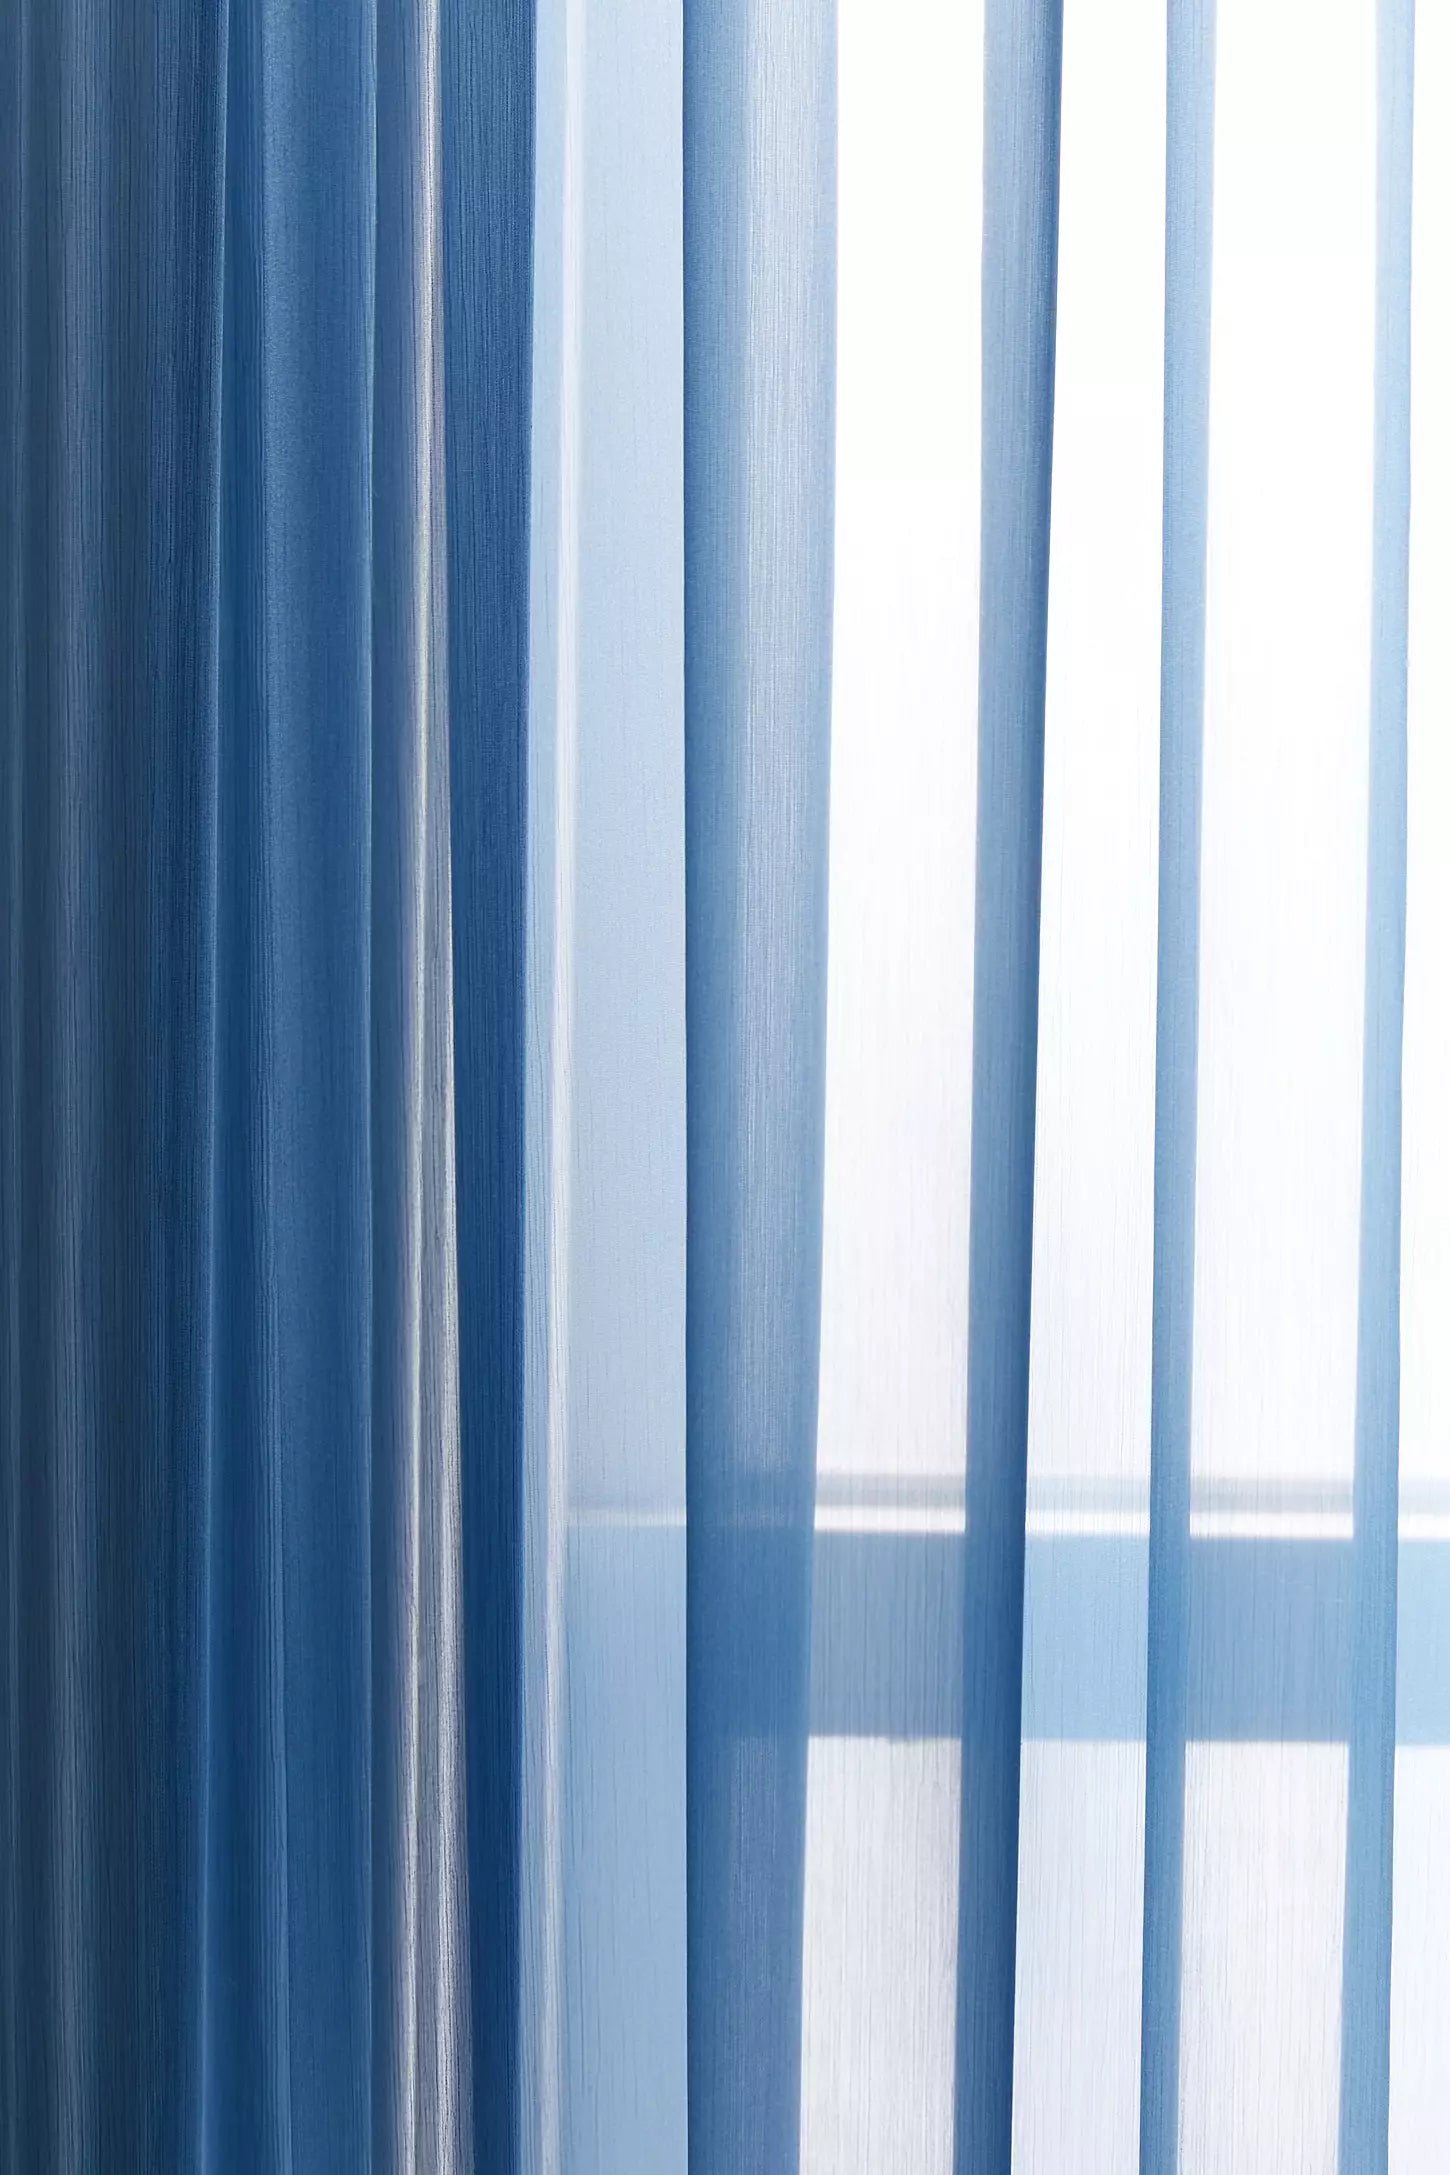 Blue Chiffon Curtain